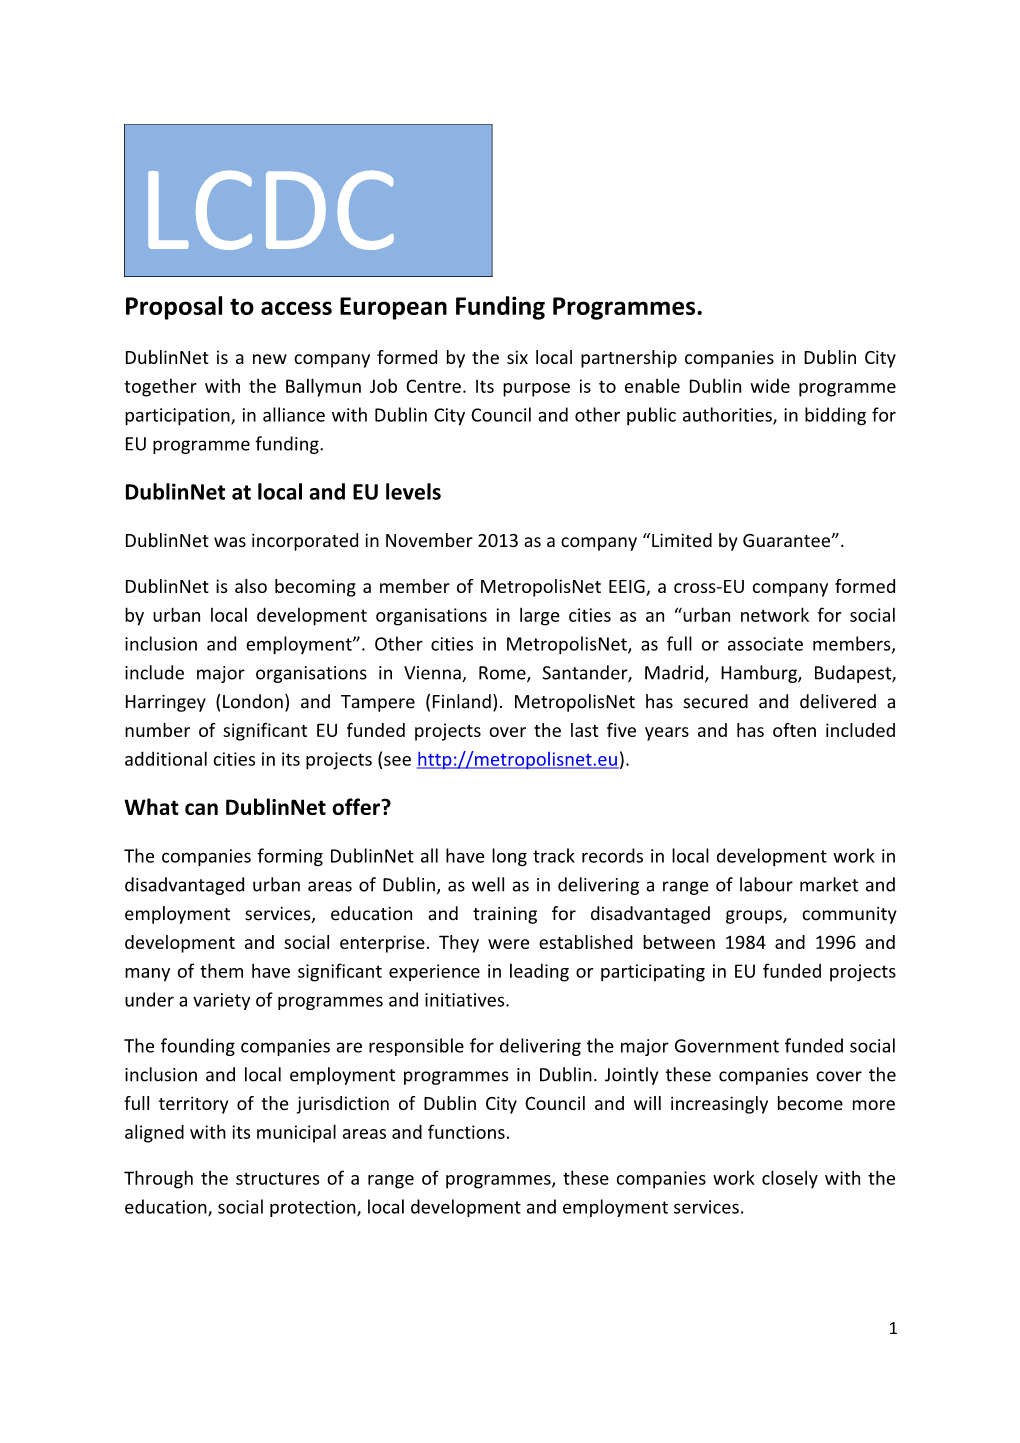 Proposal to Access European Funding Programmes